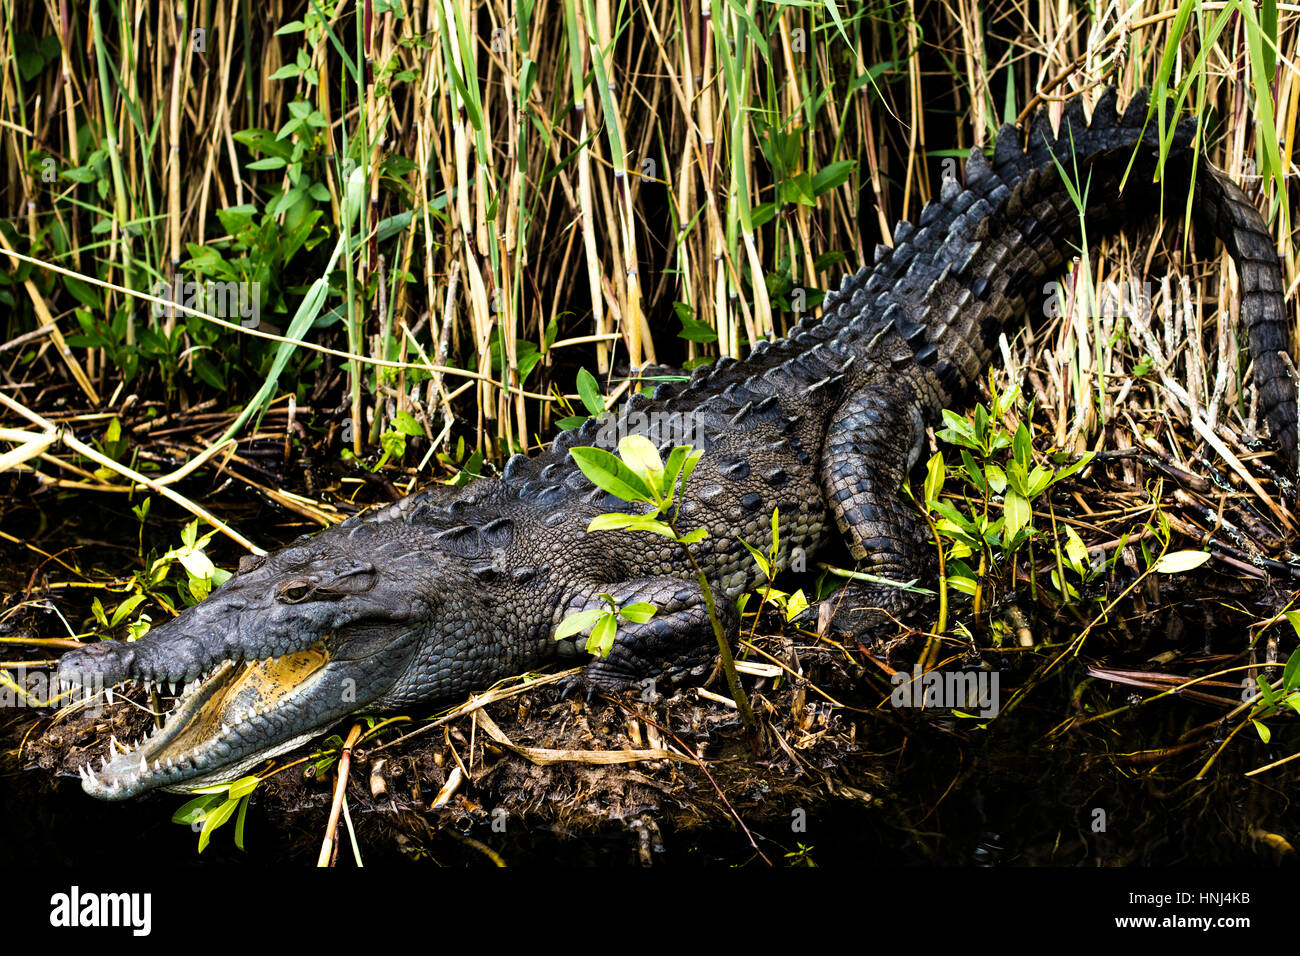 Charging crocodile in Black river, Jamaica Stock Photo